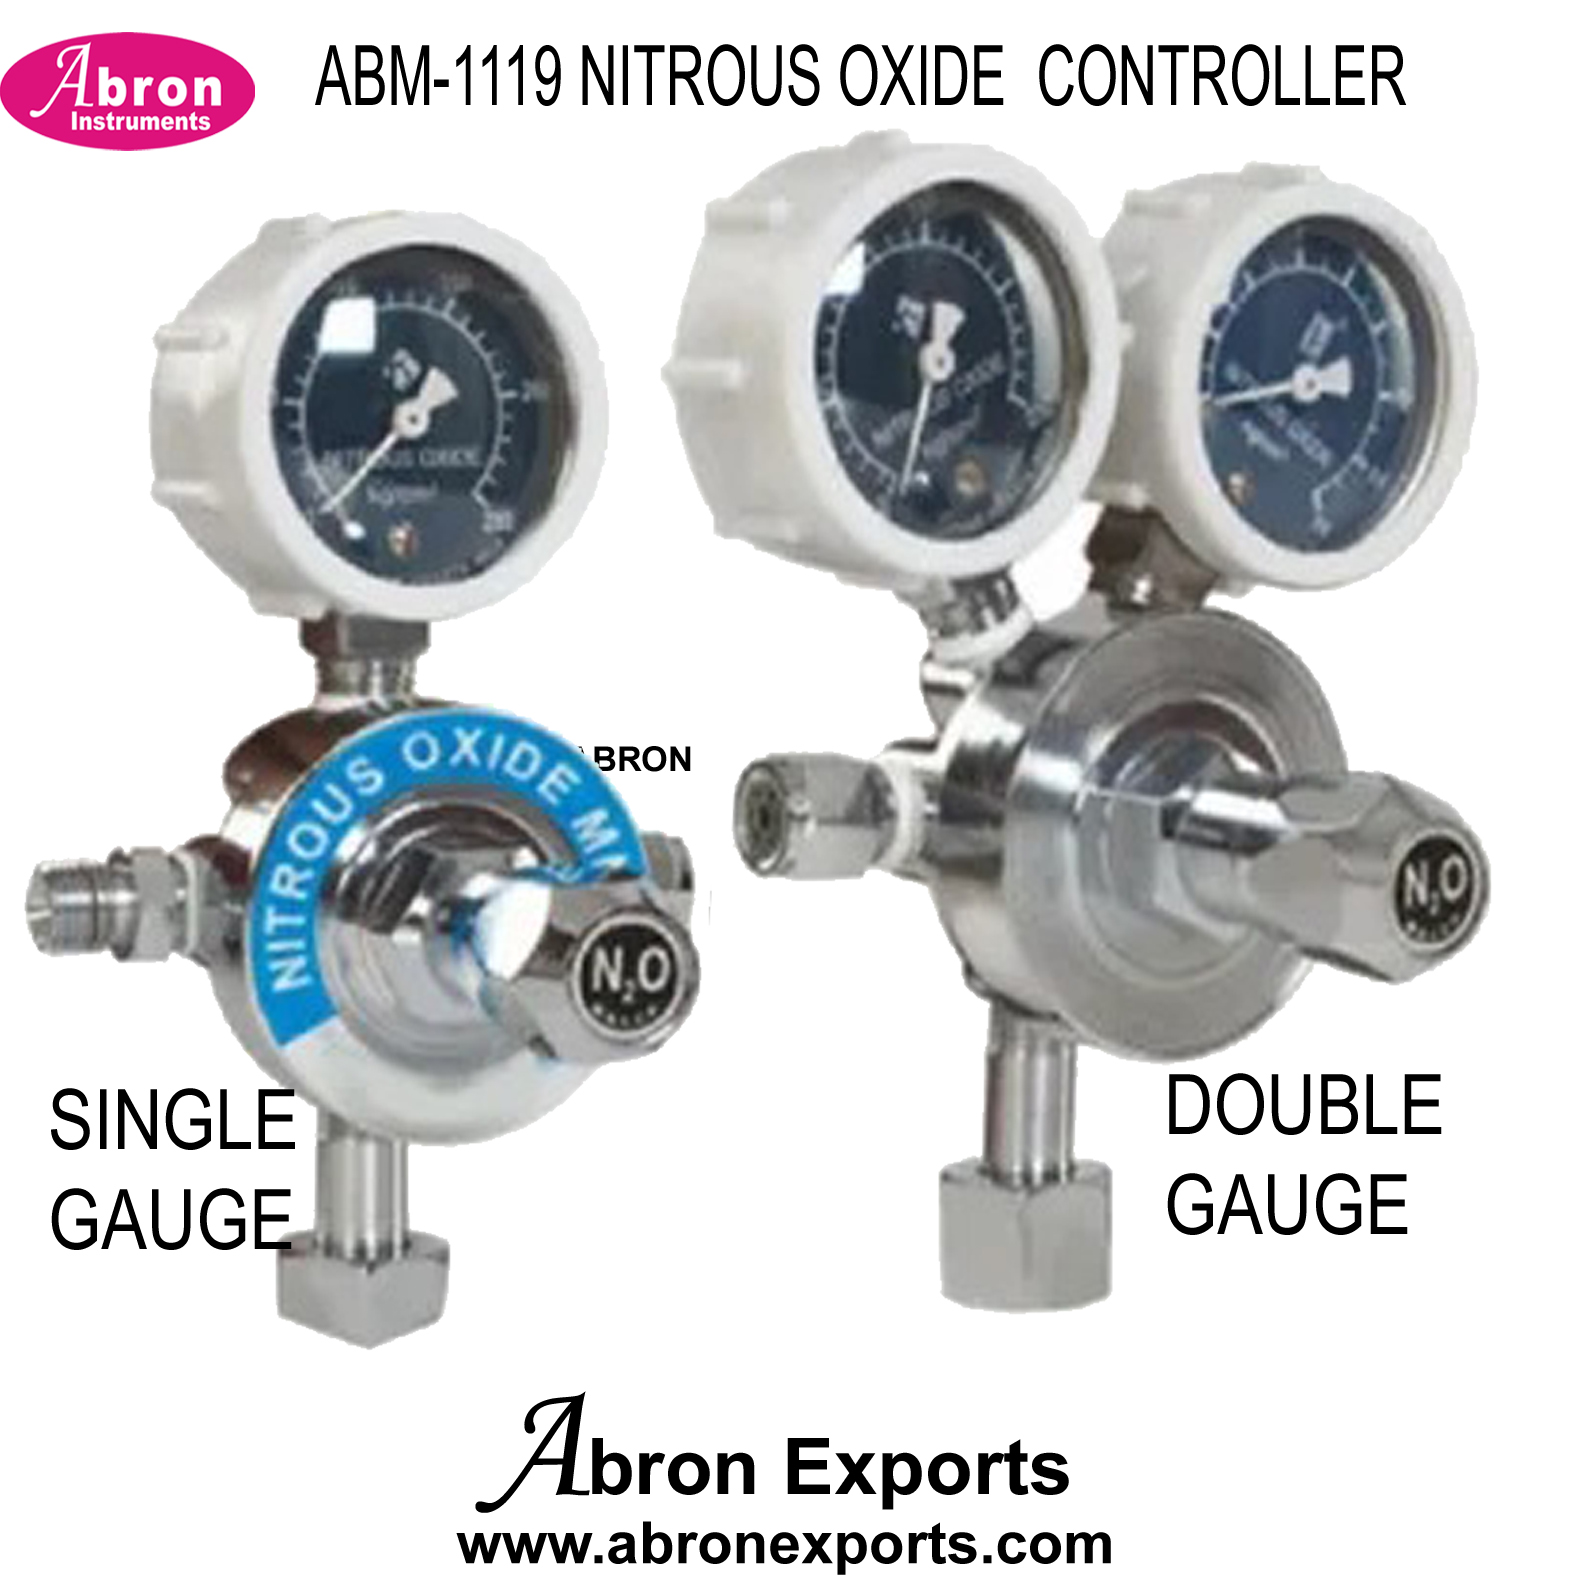 Medical Gas Nitrous Oxide controller 2 gauge regulator for pipe line terminal unit Regulator with gauge 1 no Abron ABM-1119N2 